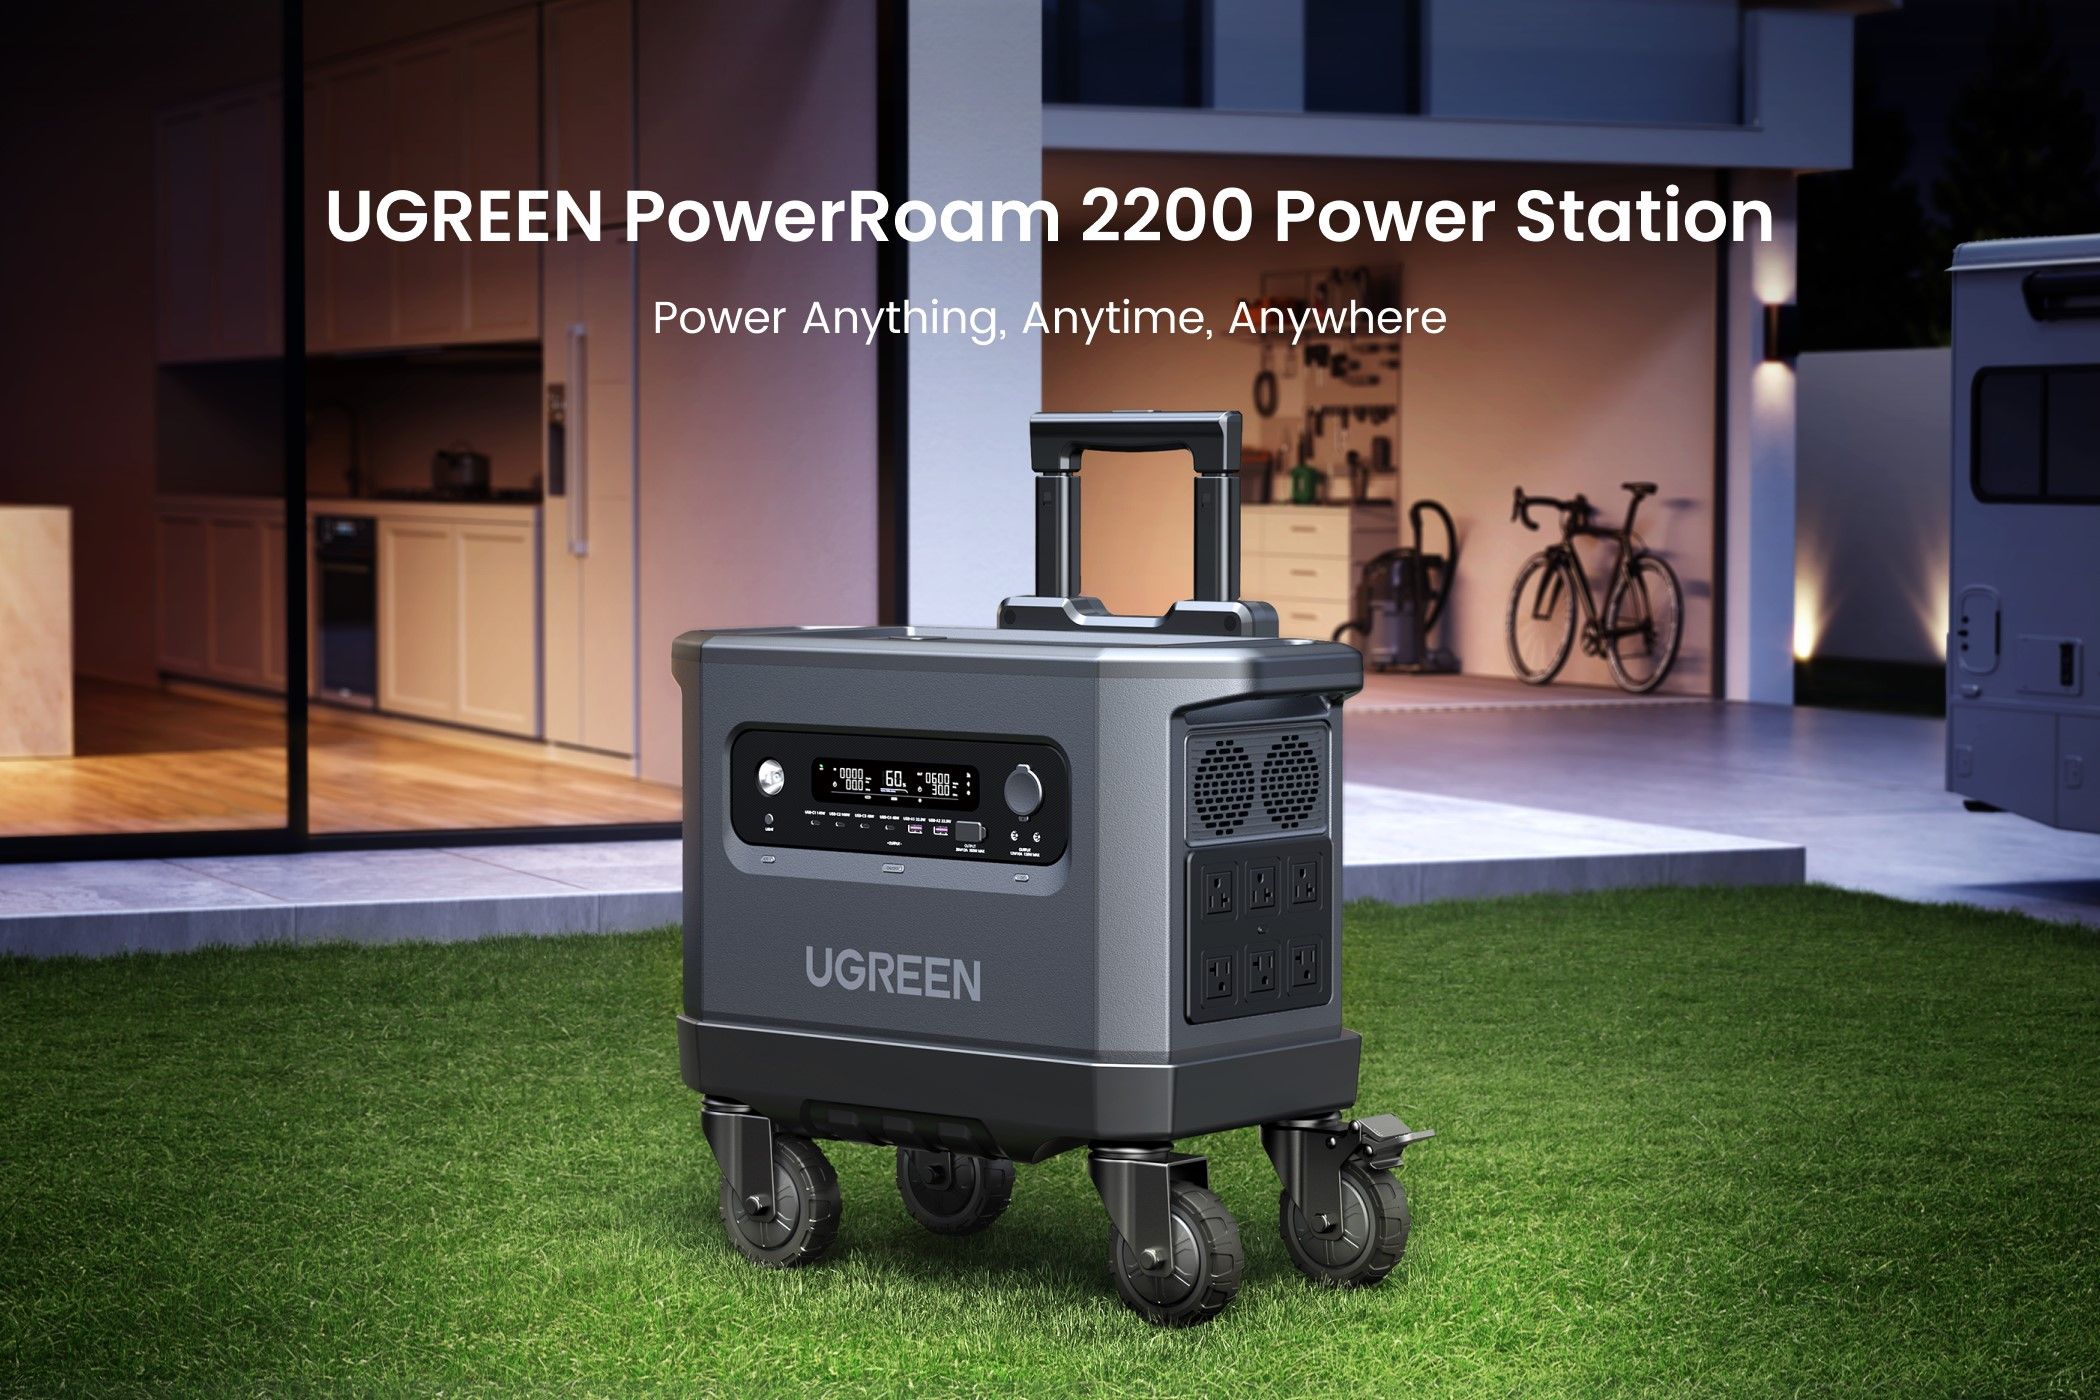 ugreen powerroam 2200 on portable trolley outdoors on grass